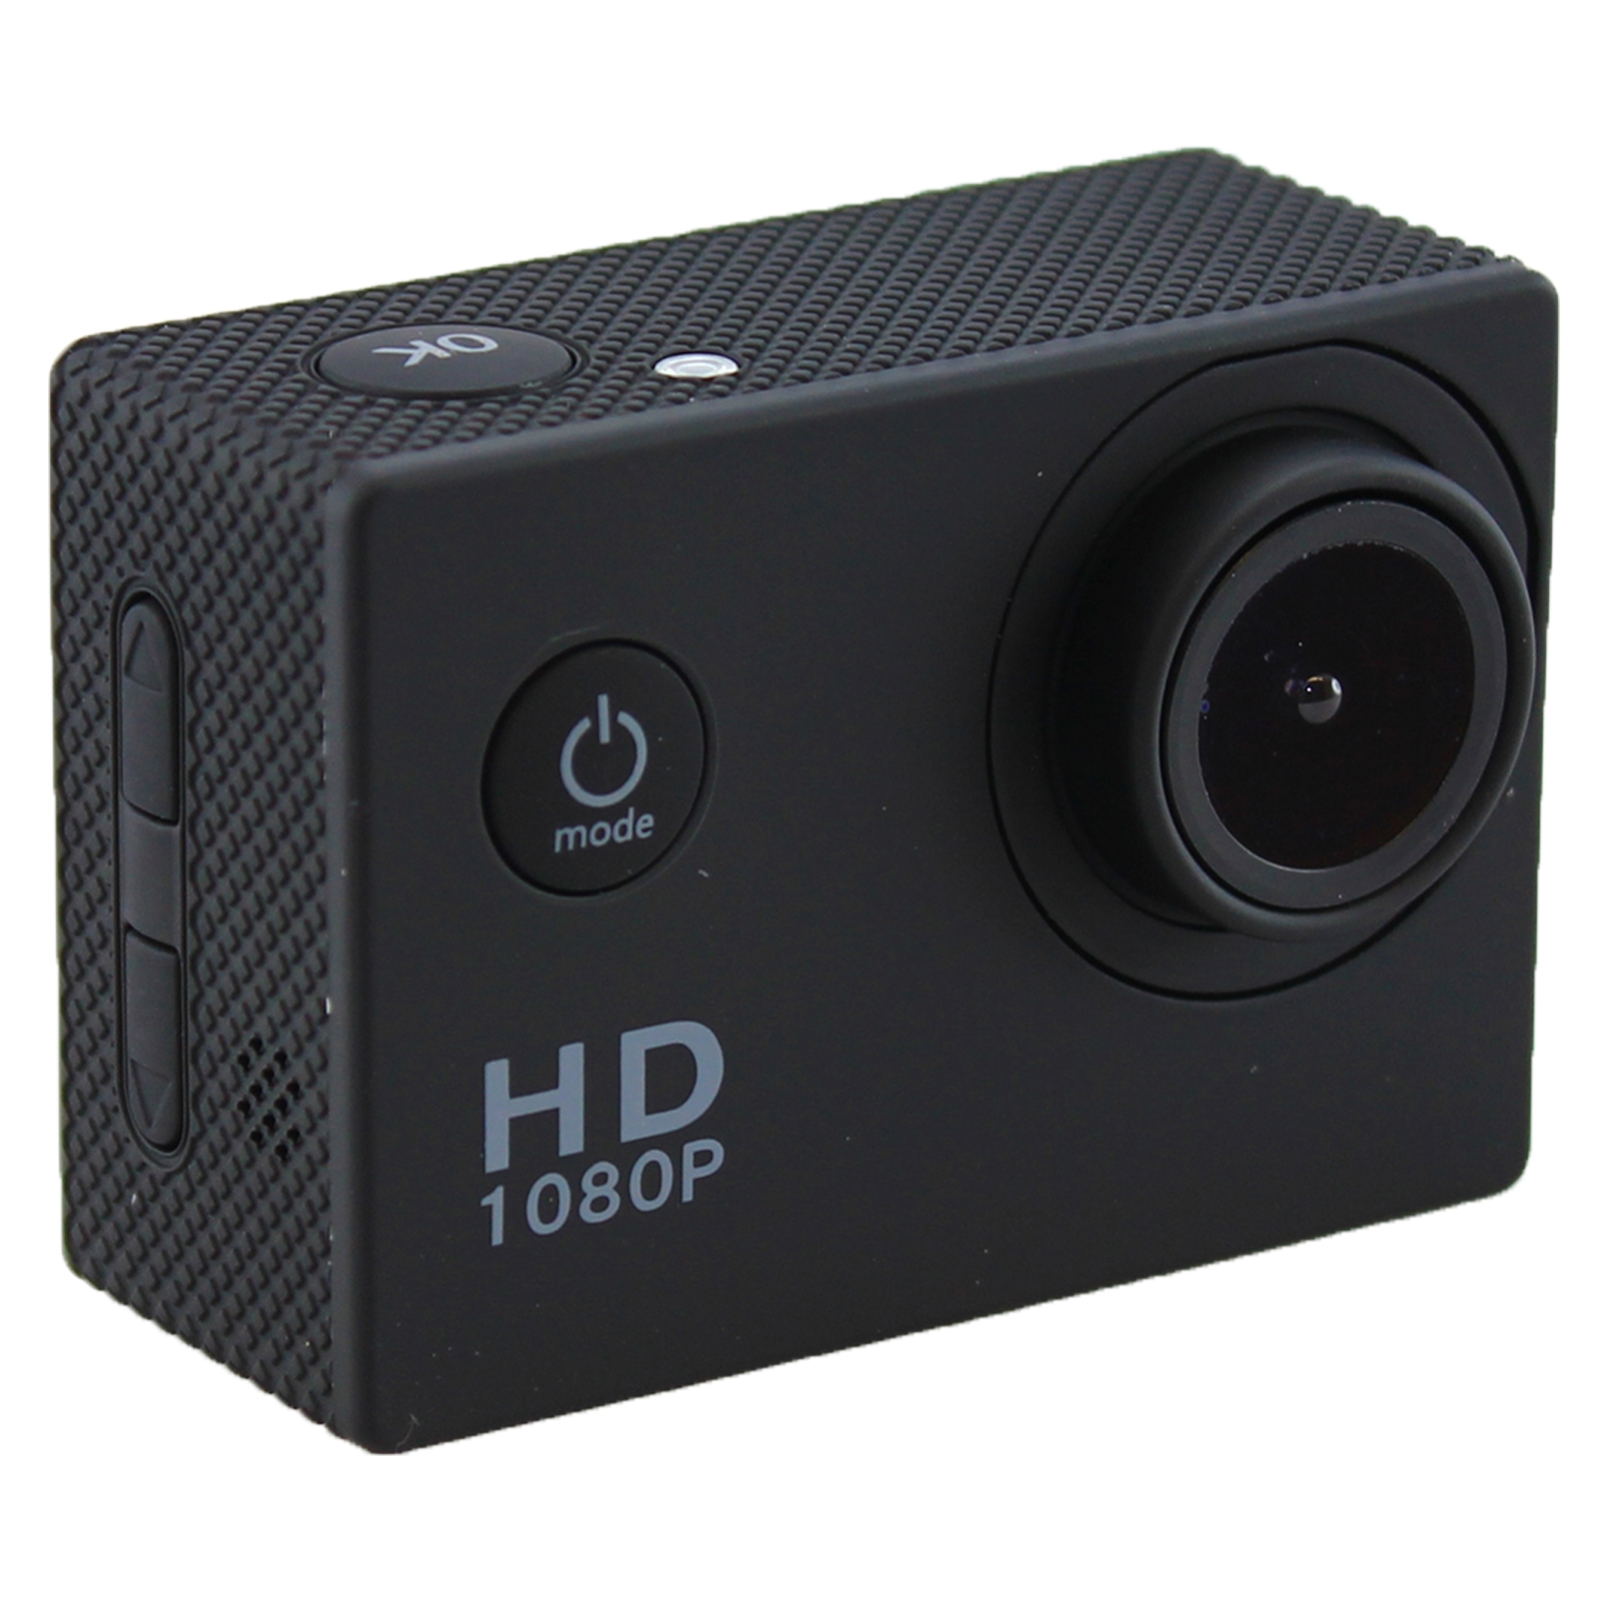 Full Hd H264 1080p Sports Camera Sj4000 5mp Car Cam Action Waterproof Spca1520 Ebay